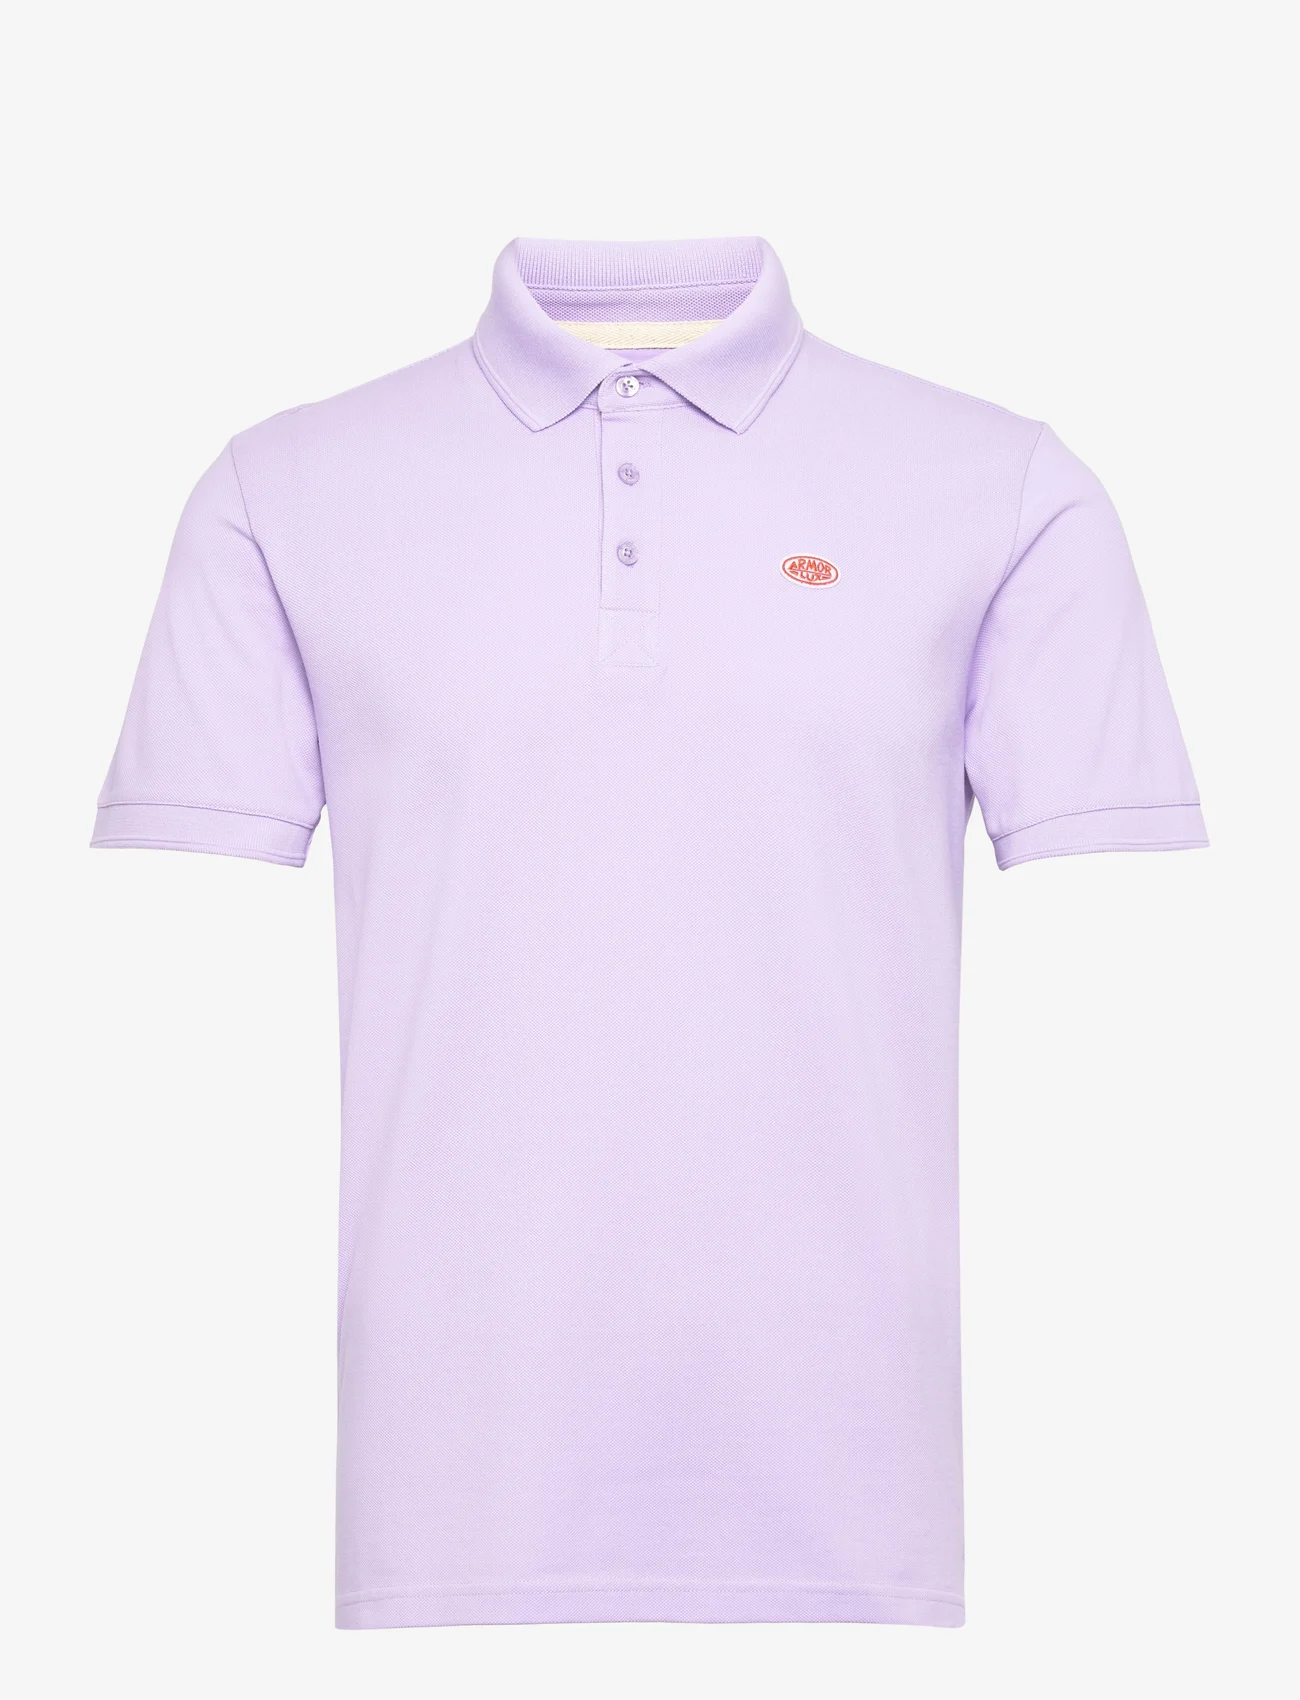 Armor Lux - Polo-Shirt - polo shirts - pastel lilac - 0